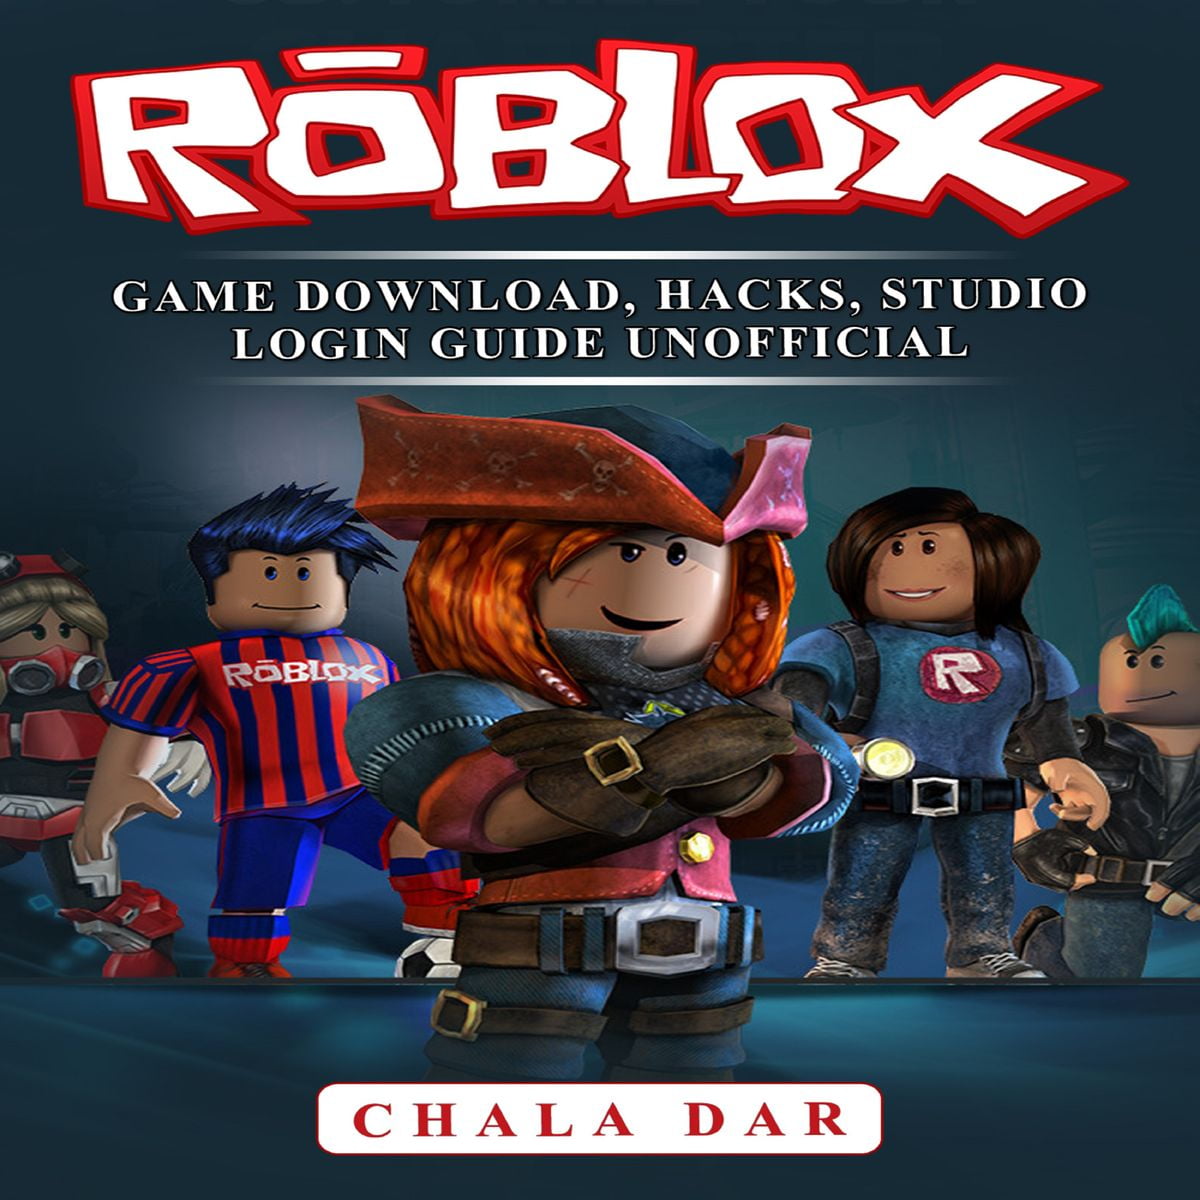 Roblox Game Download Hacks Studio Login Guide Unofficial Audiobook Walmart Com Walmart Com - roblox zoom hack